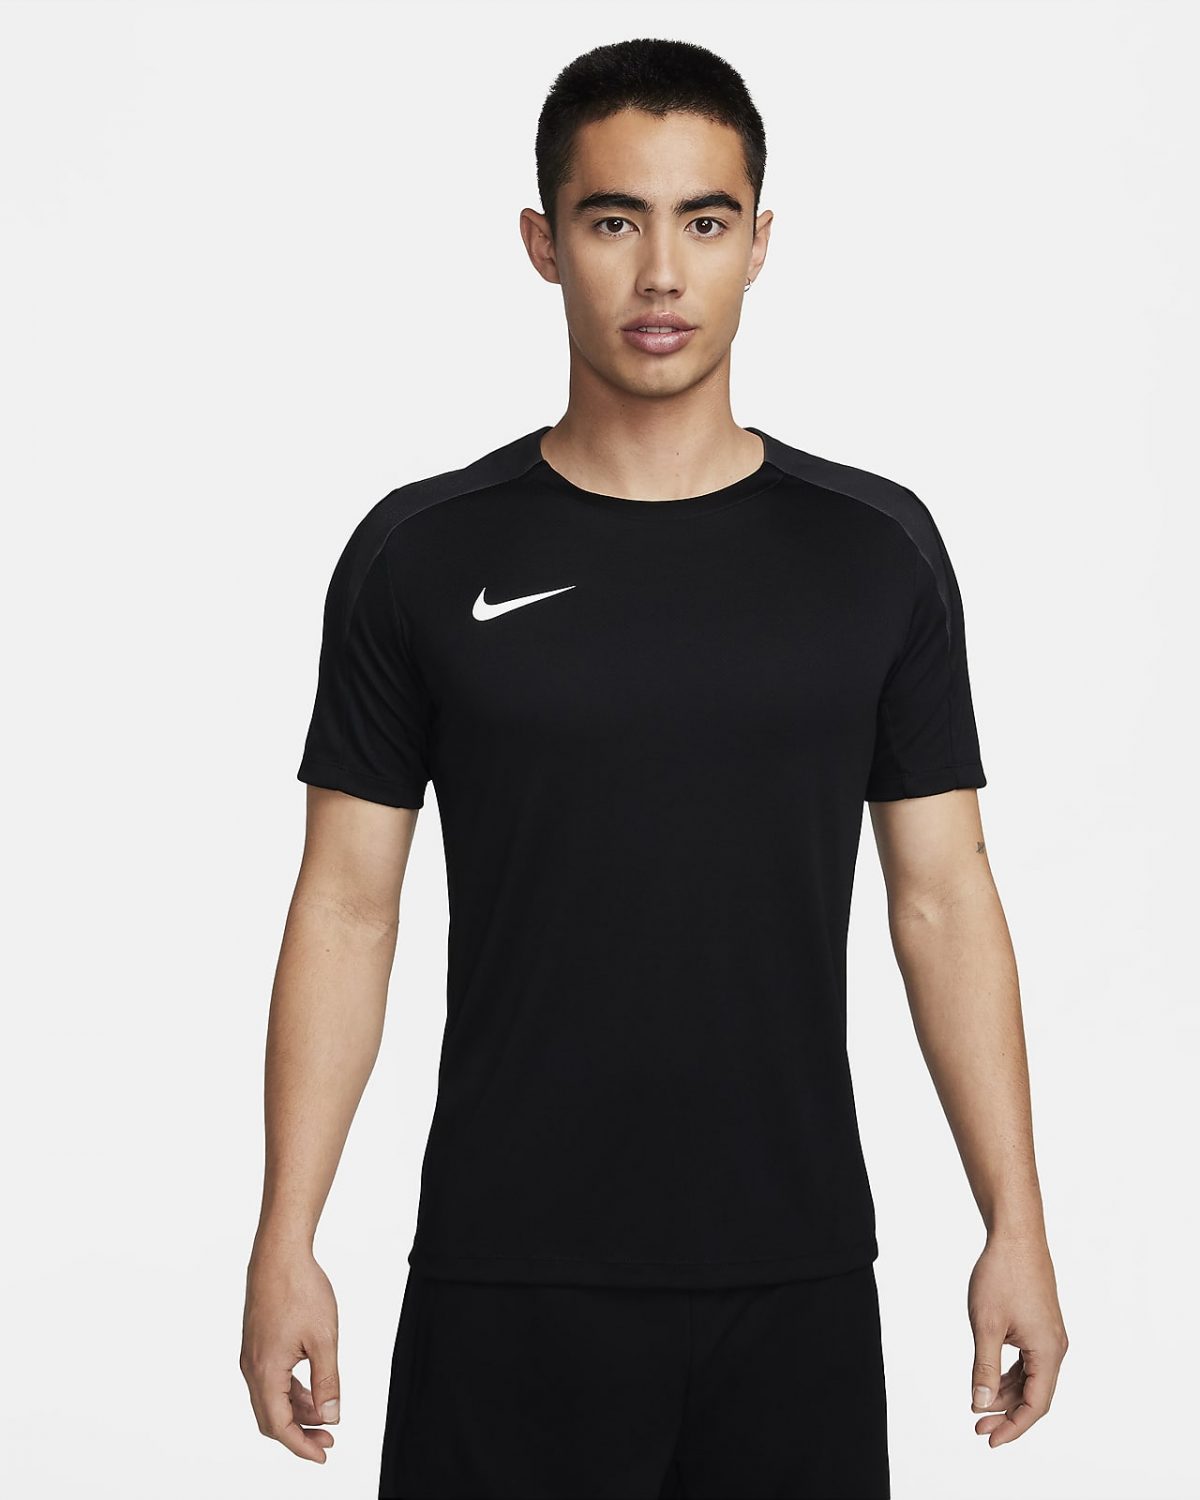 Мужская рубашка Nike Strike фото